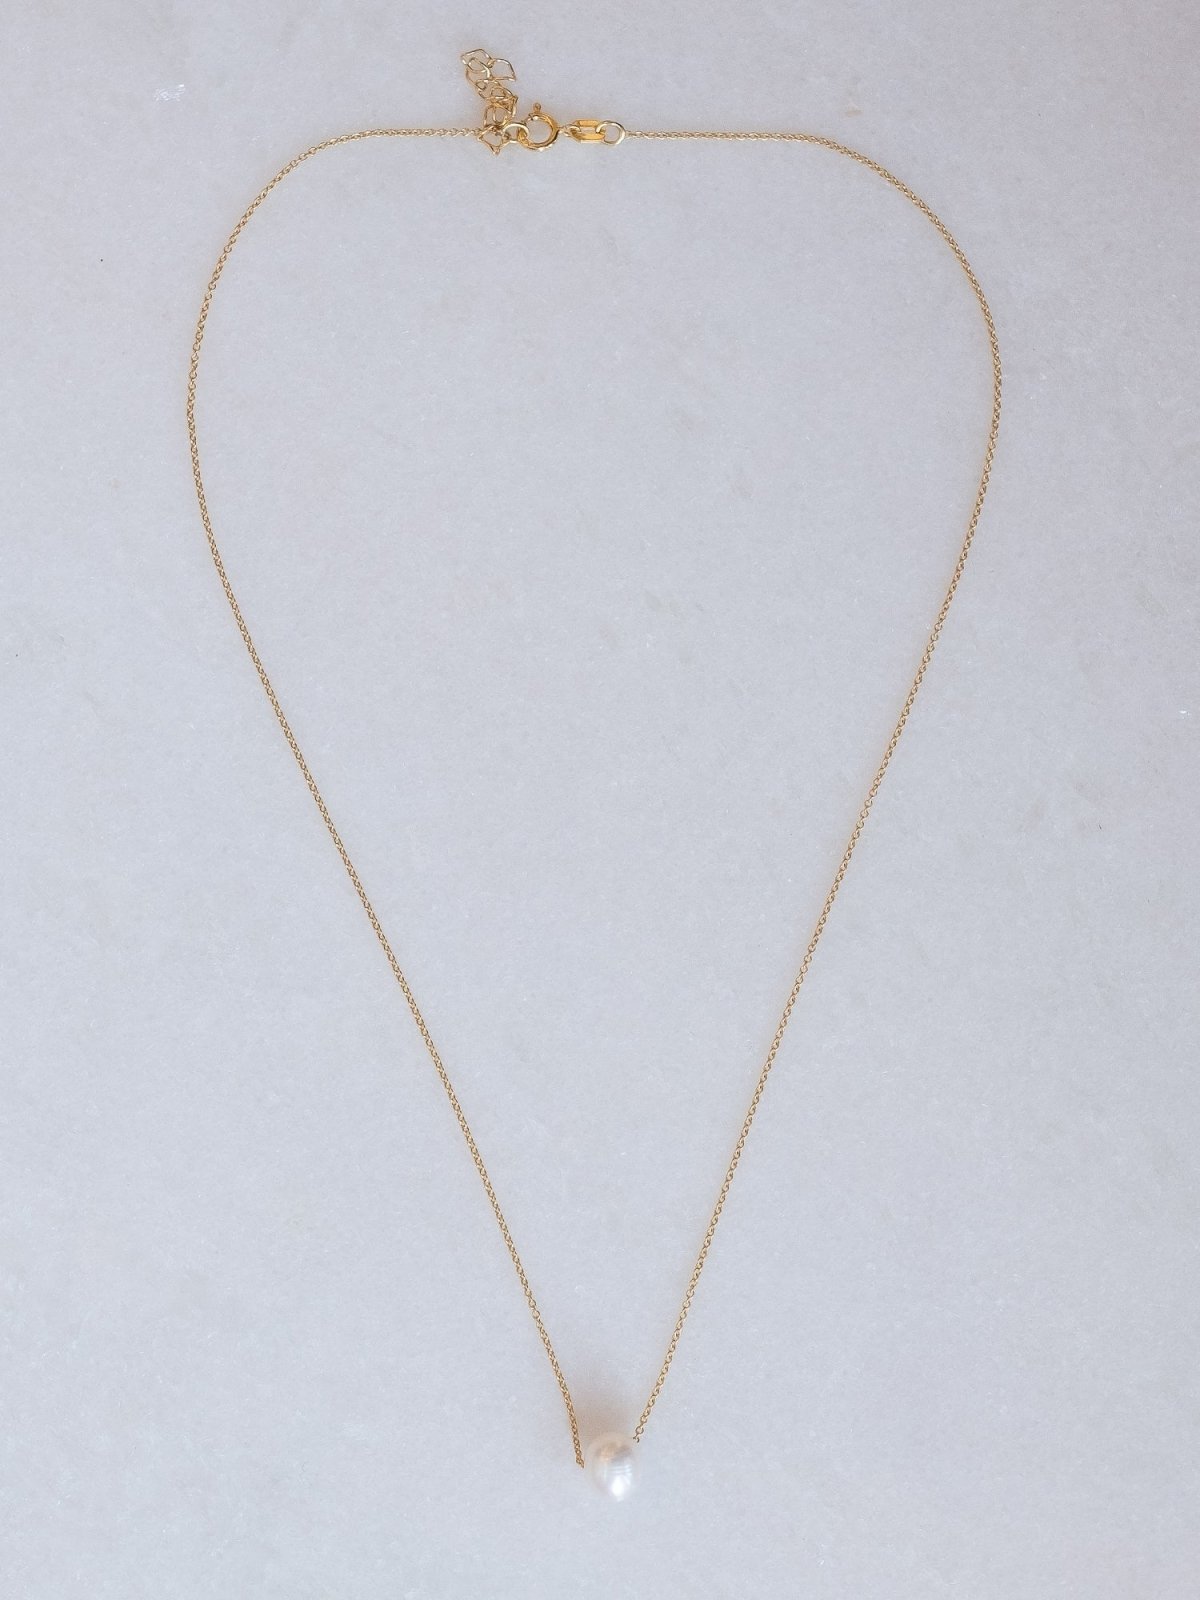 Fresh water pearl on delicate chain necklace te koop in de webshop van Almost Summer Amsterdam